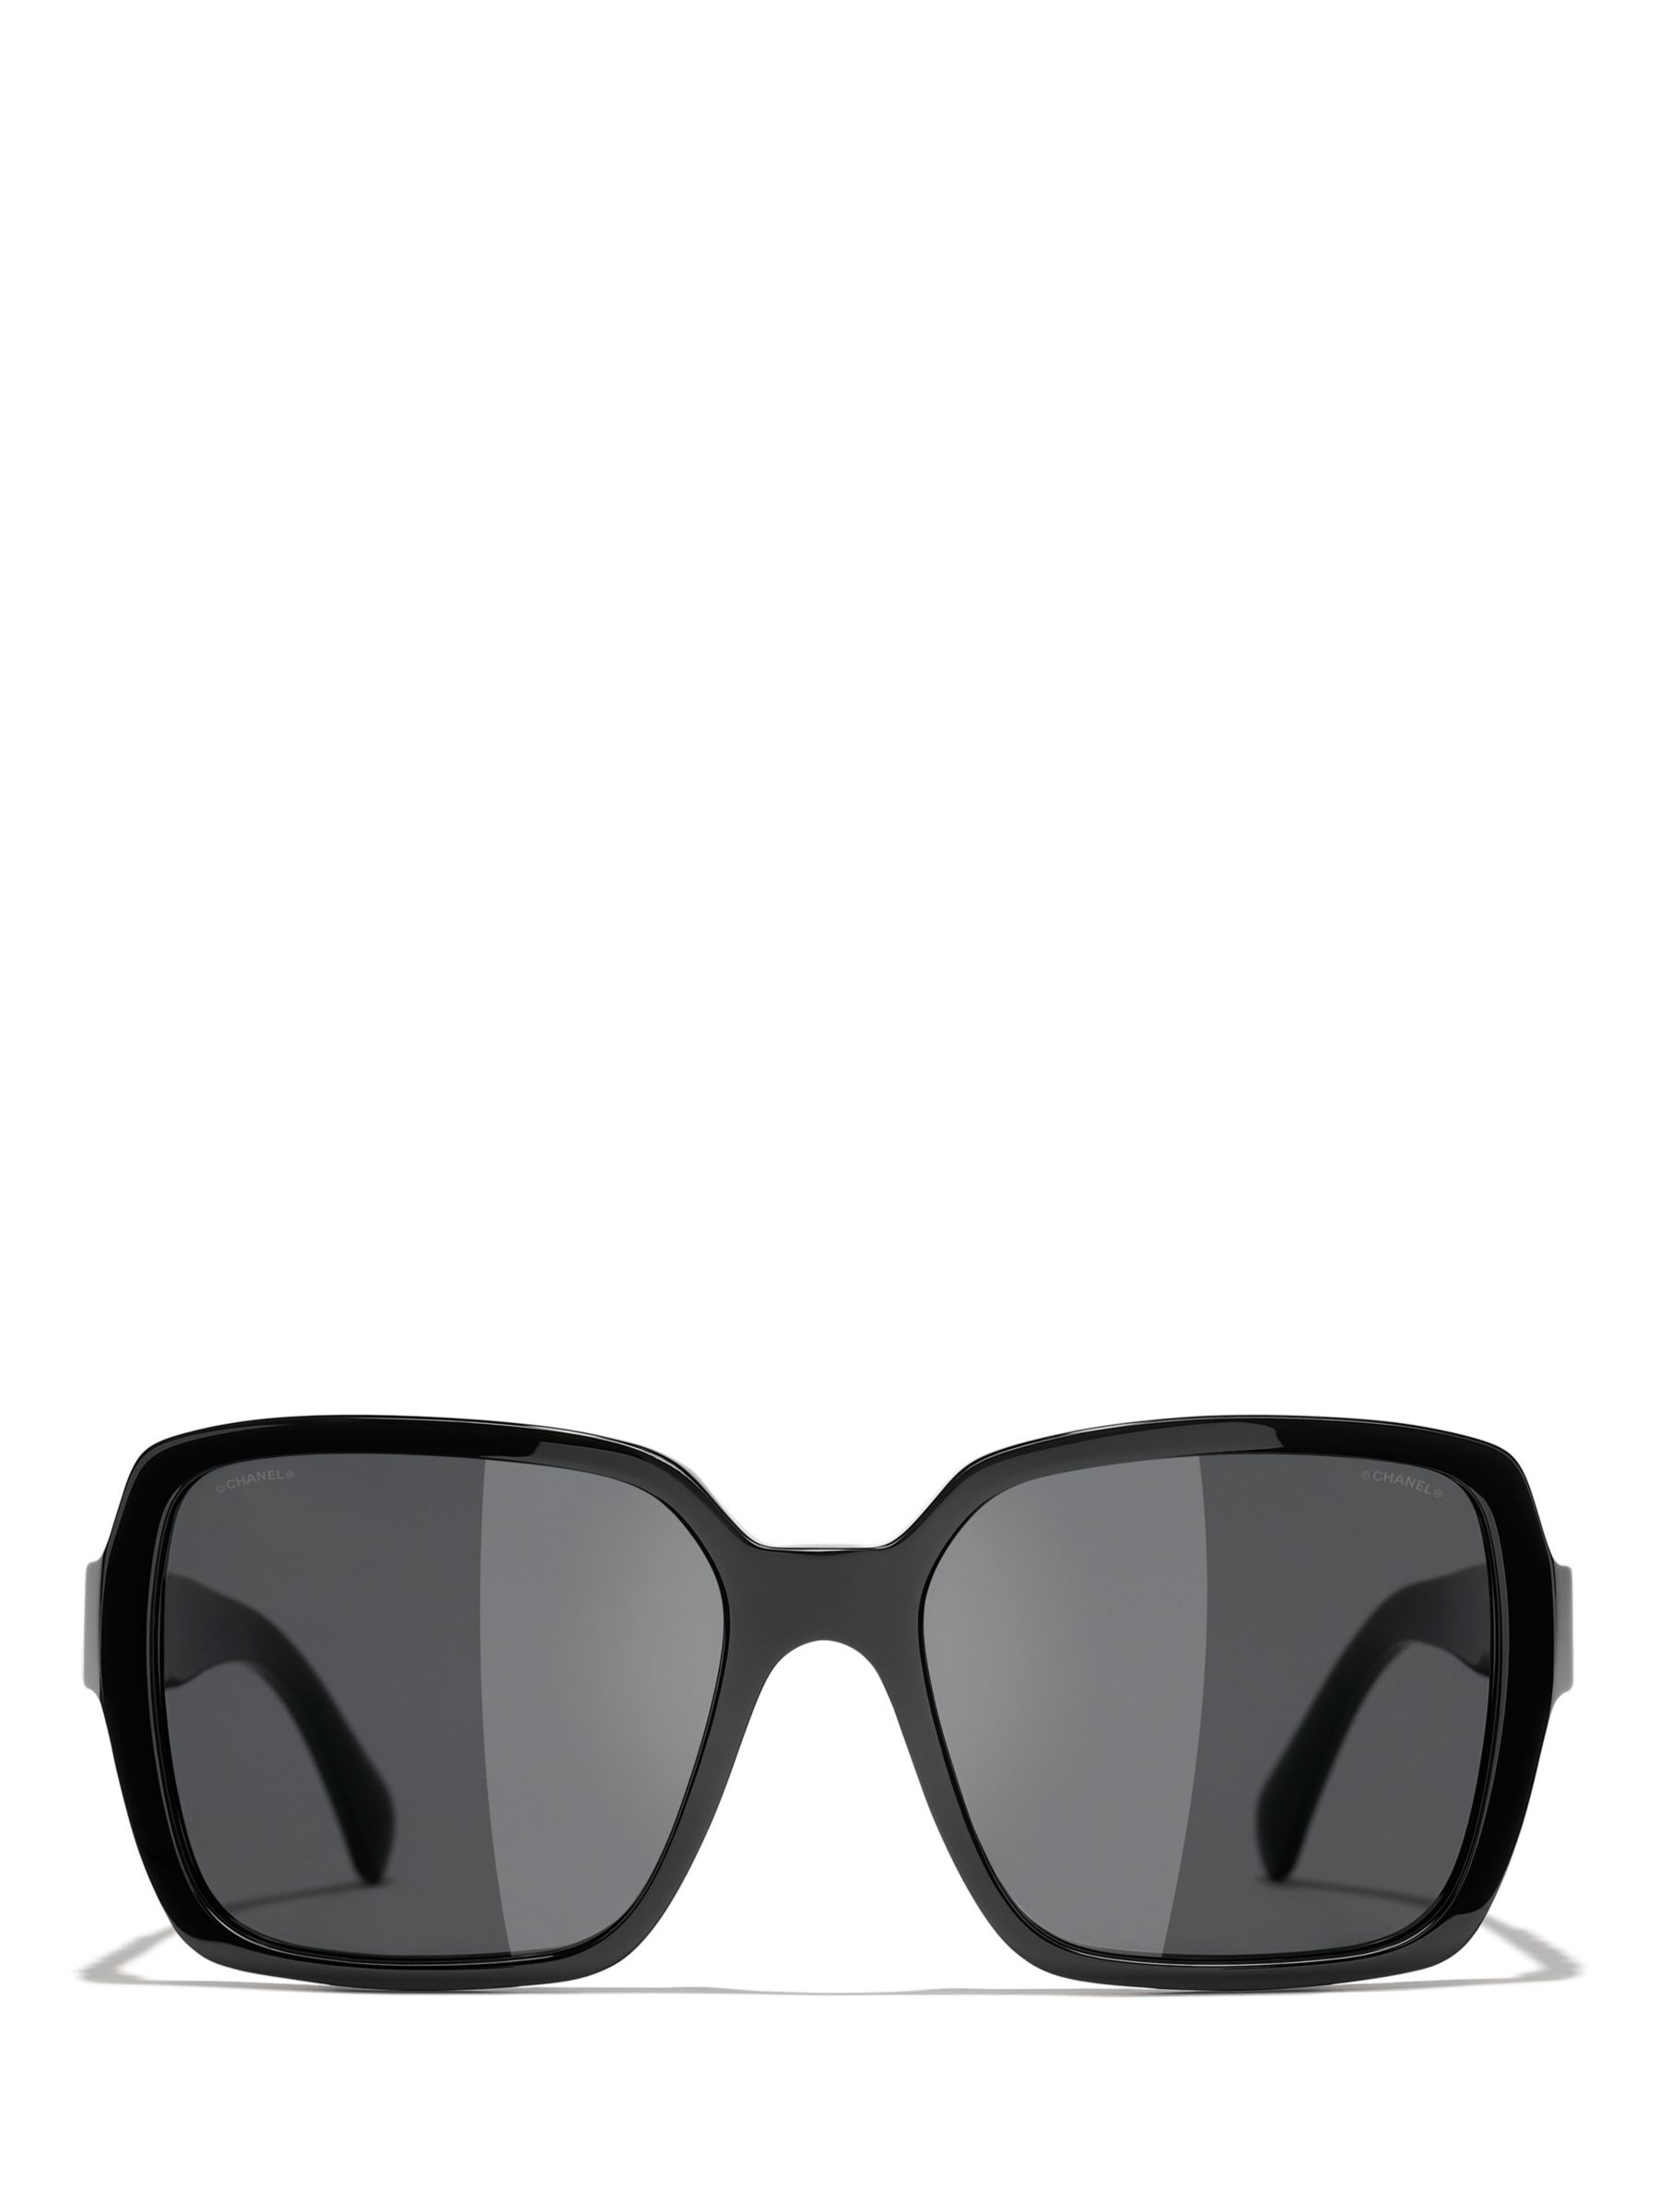 CHANEL Pillow Sunglasses CH5408, Black at John Lewis & Partners